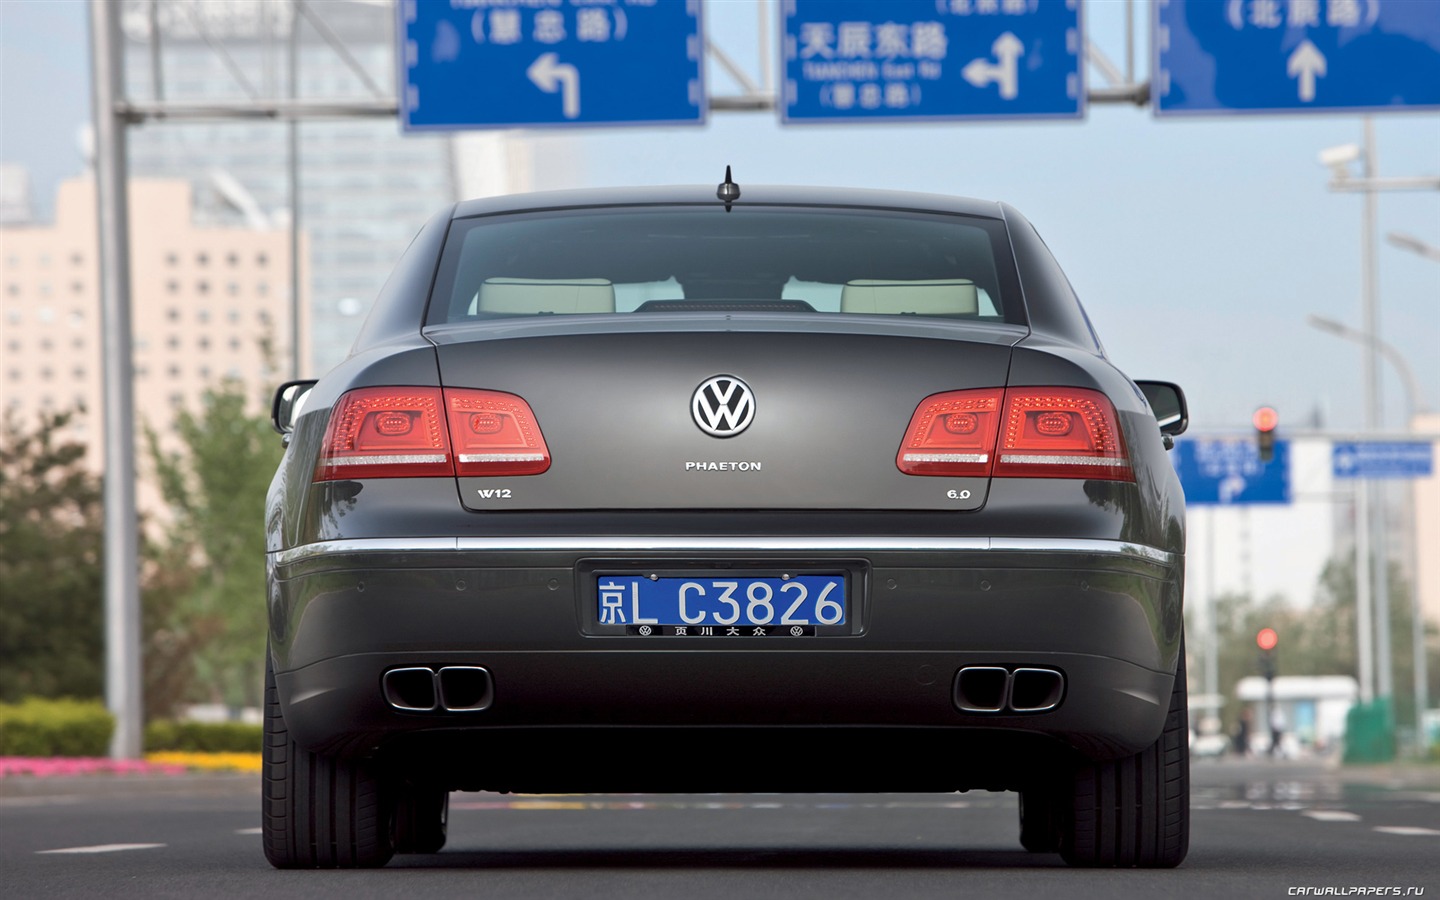 Volkswagen Phaeton W12 long wheelbase - 2010 大眾 #15 - 1440x900